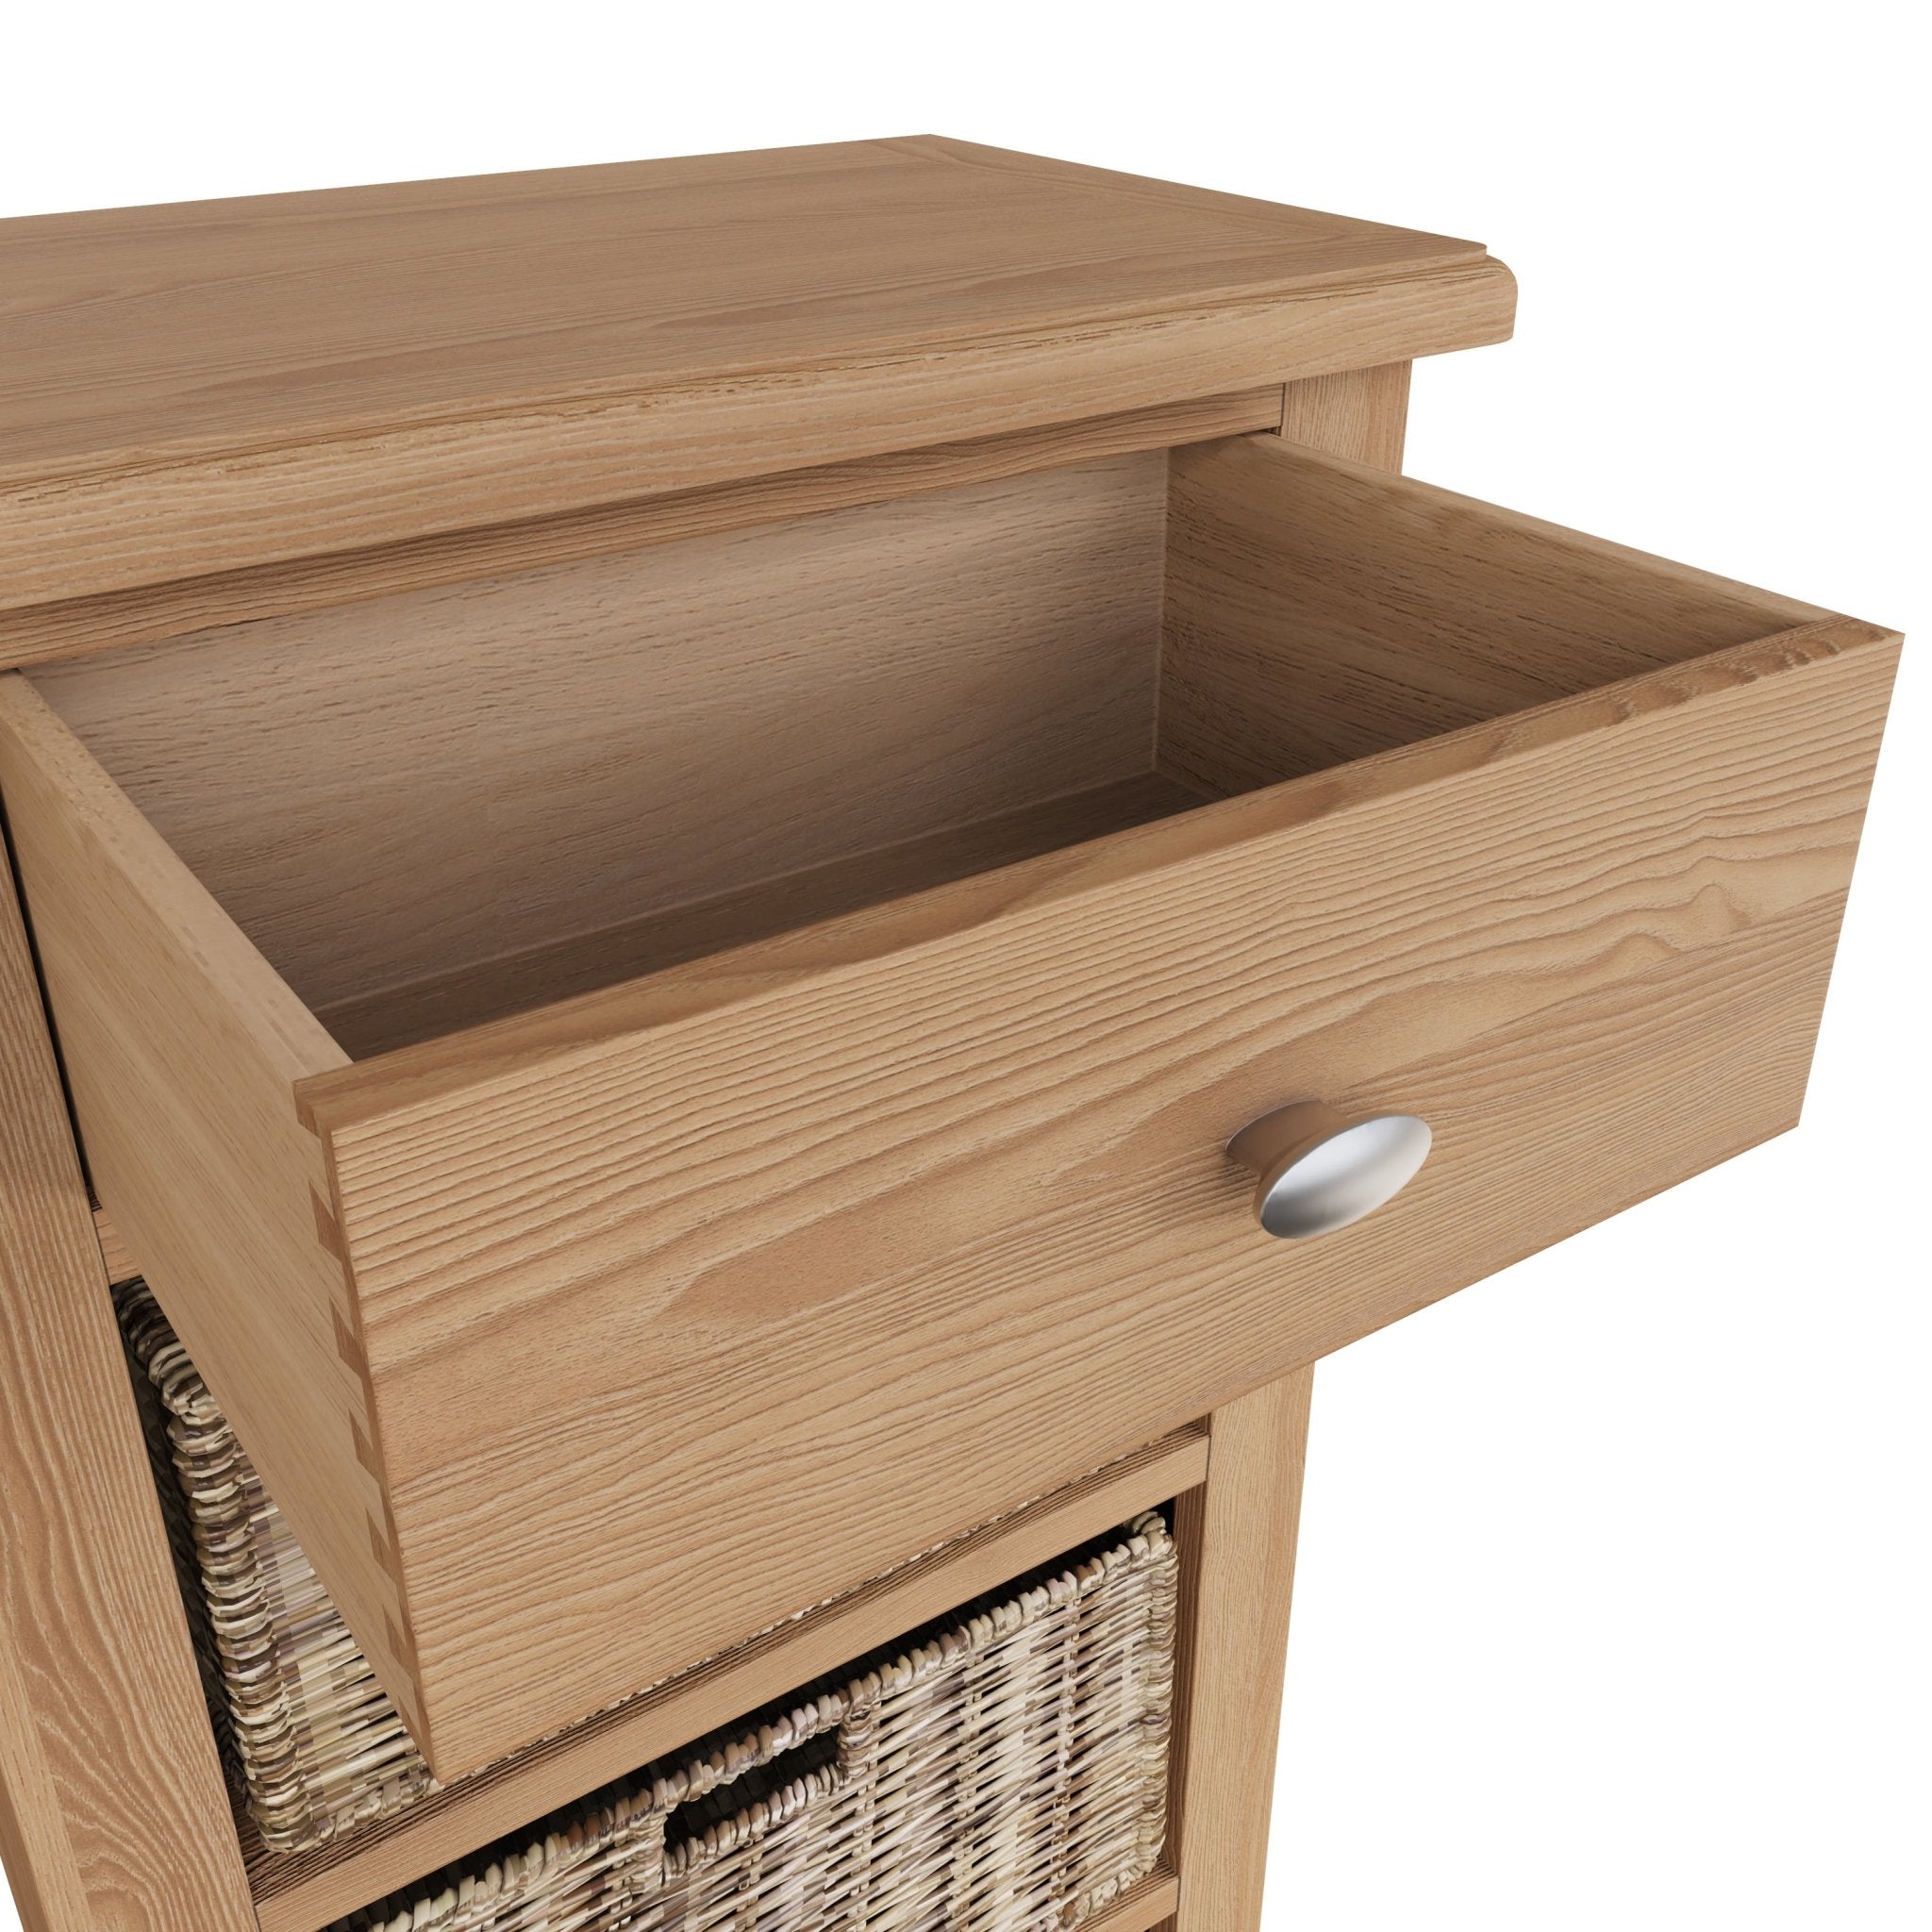 Ockley Oak 1 Drawer 3 Basket Cabinet - Duck Barn Interiors